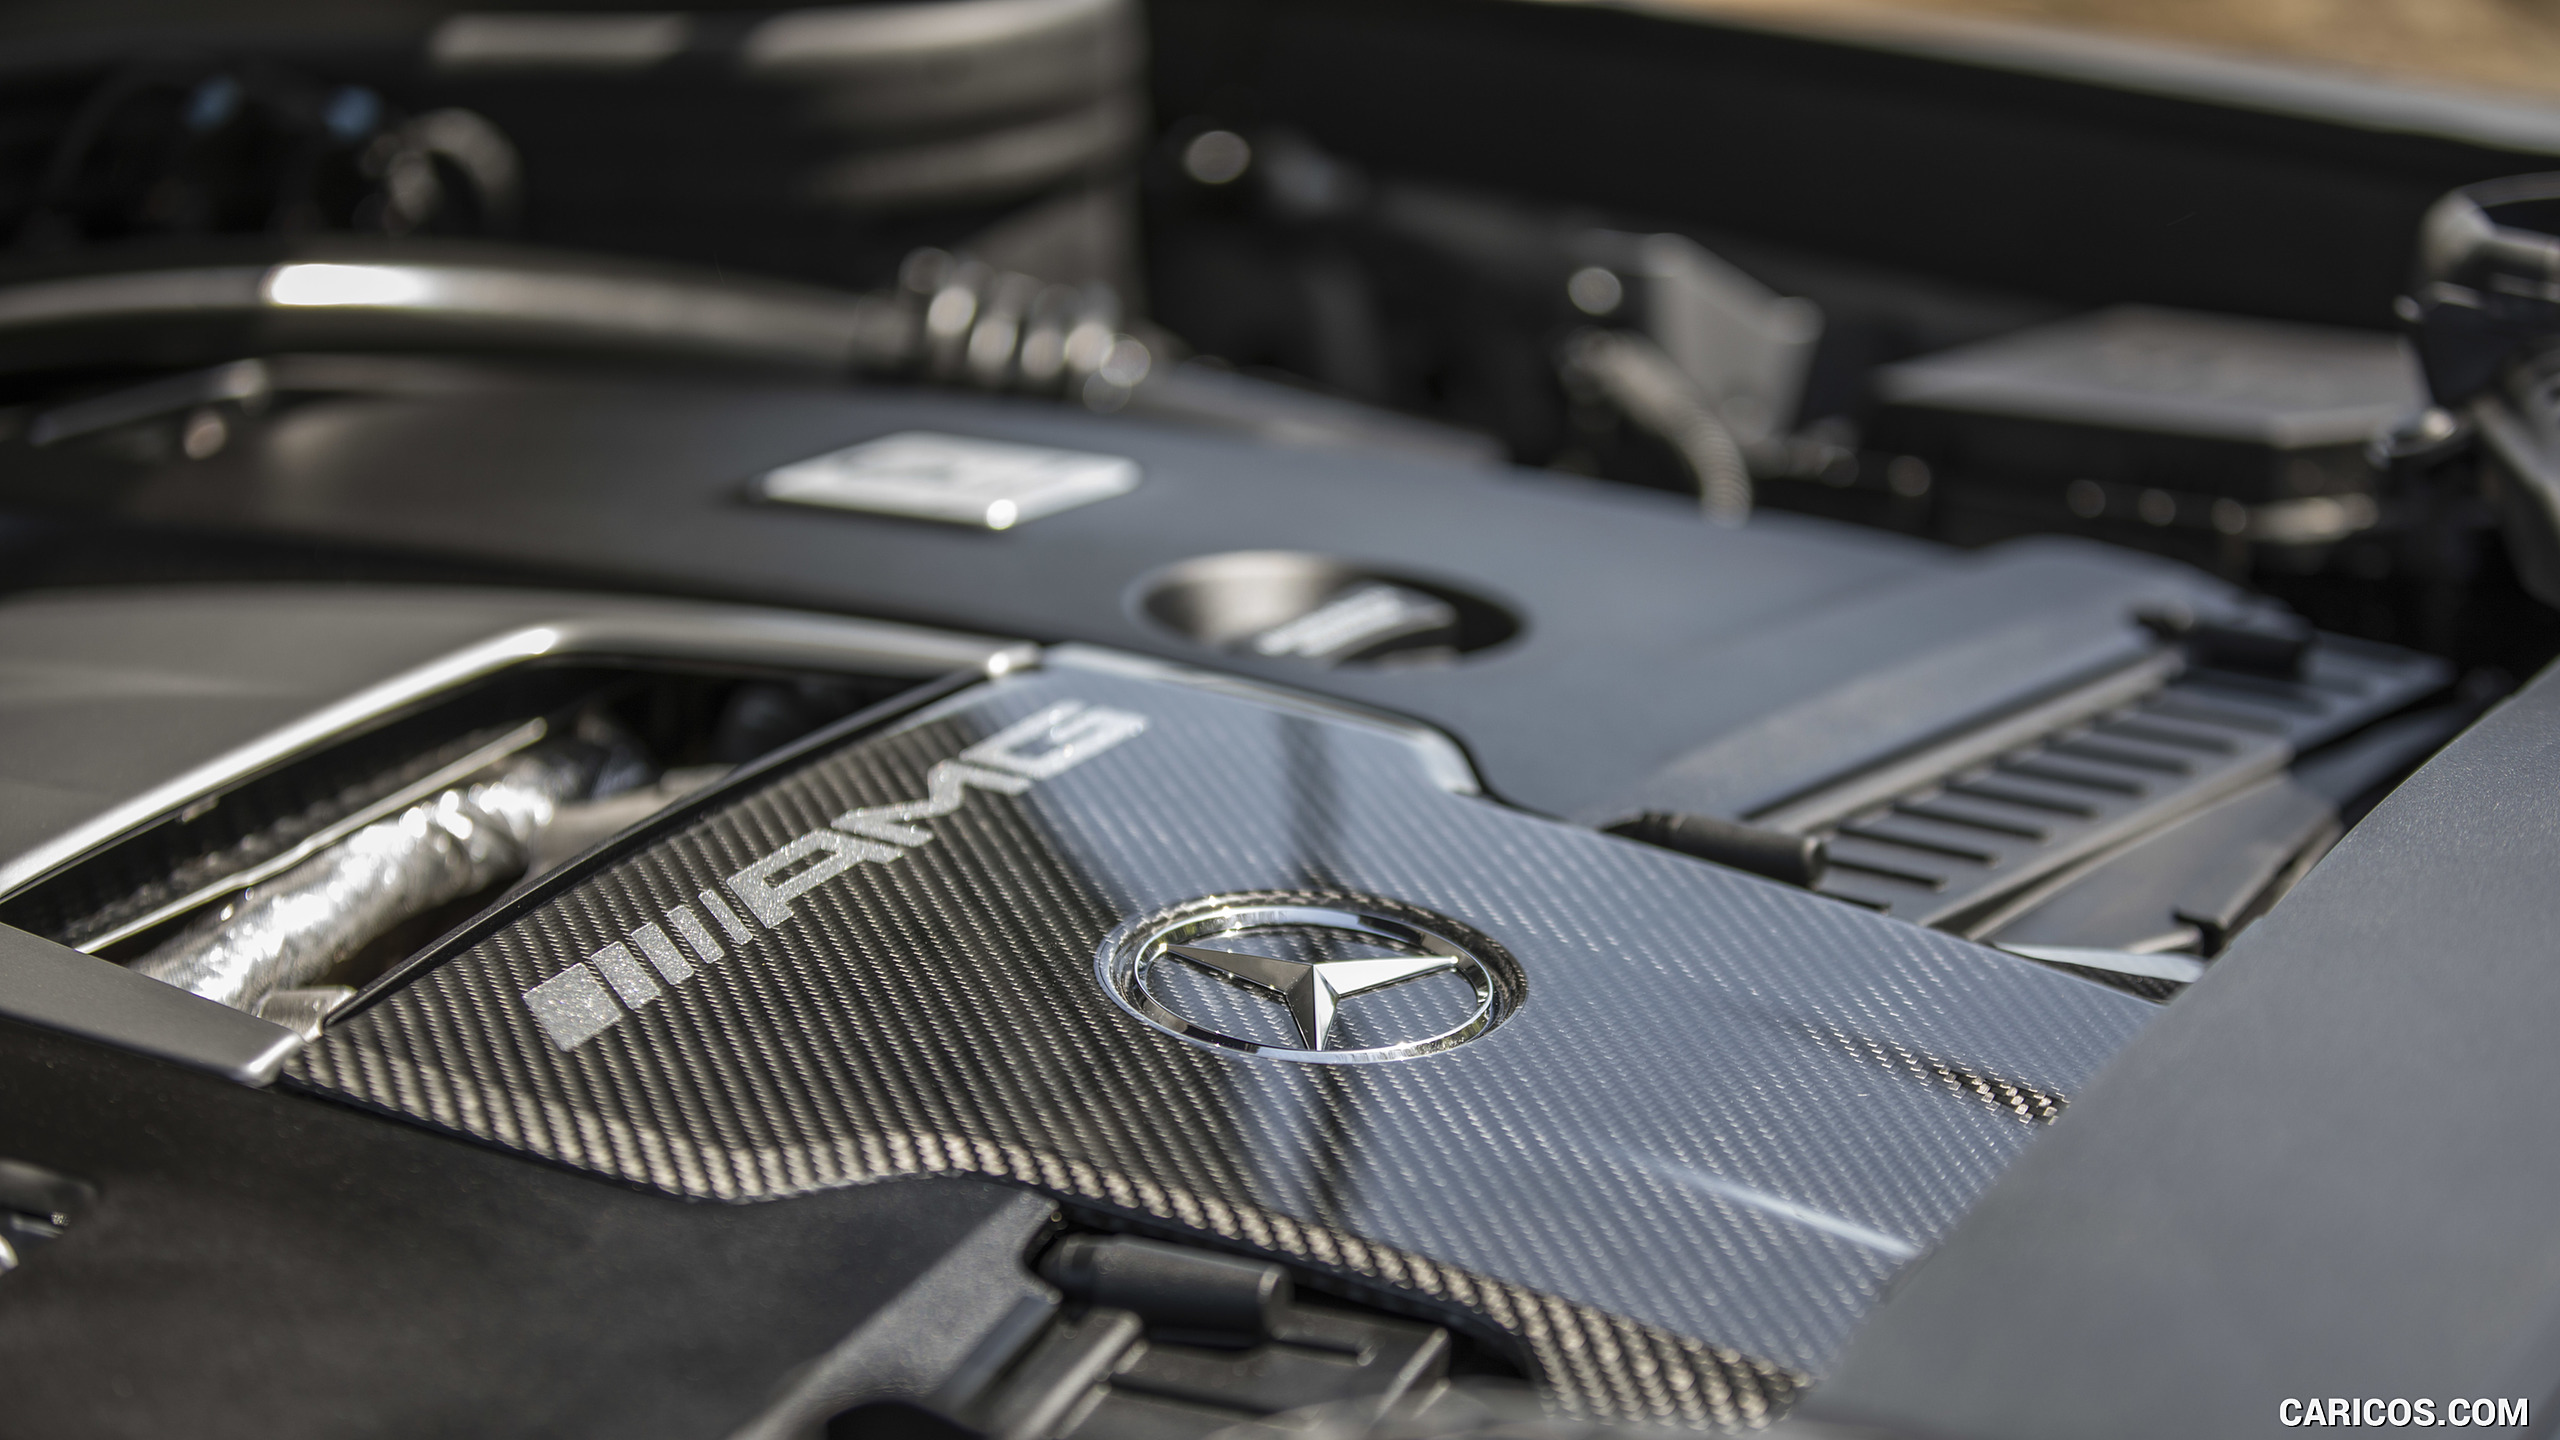 2019 Mercedes-AMG G63 - Engine, #187 of 452